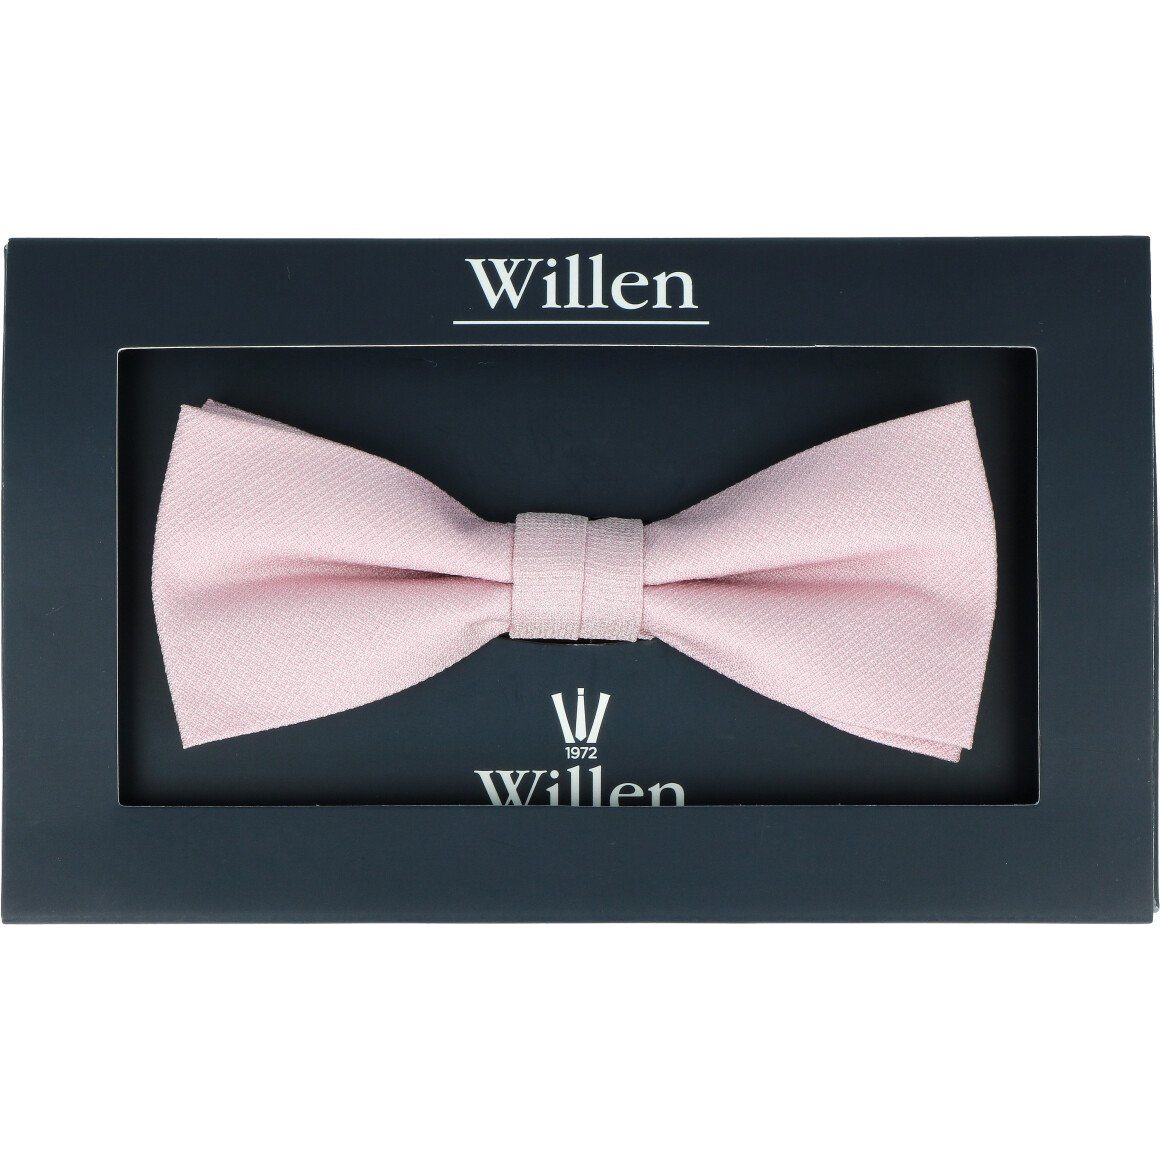 Krawatte WILLEN rosa